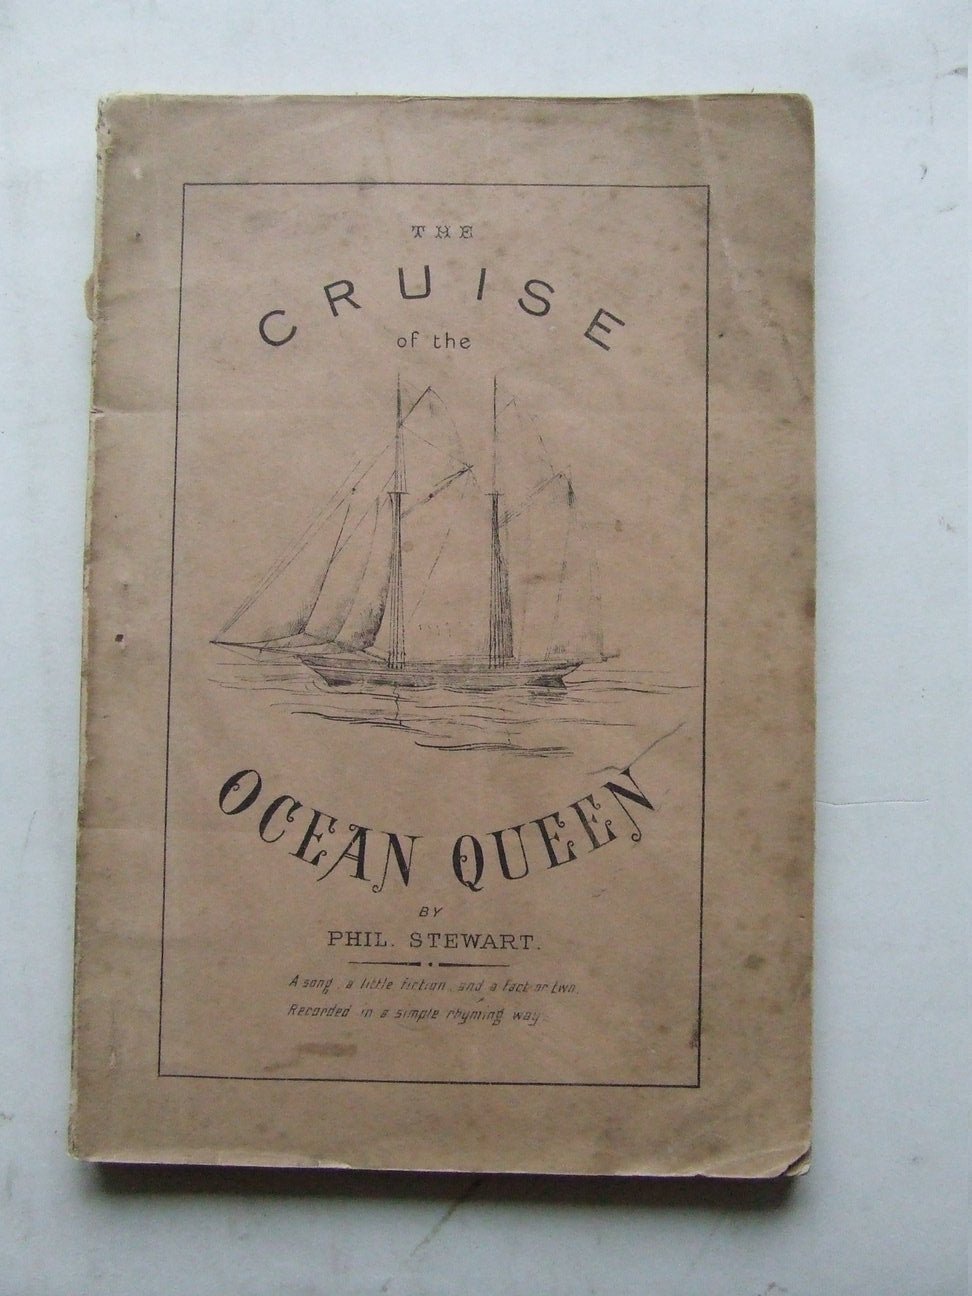 The Cruise of the Ocean Queen